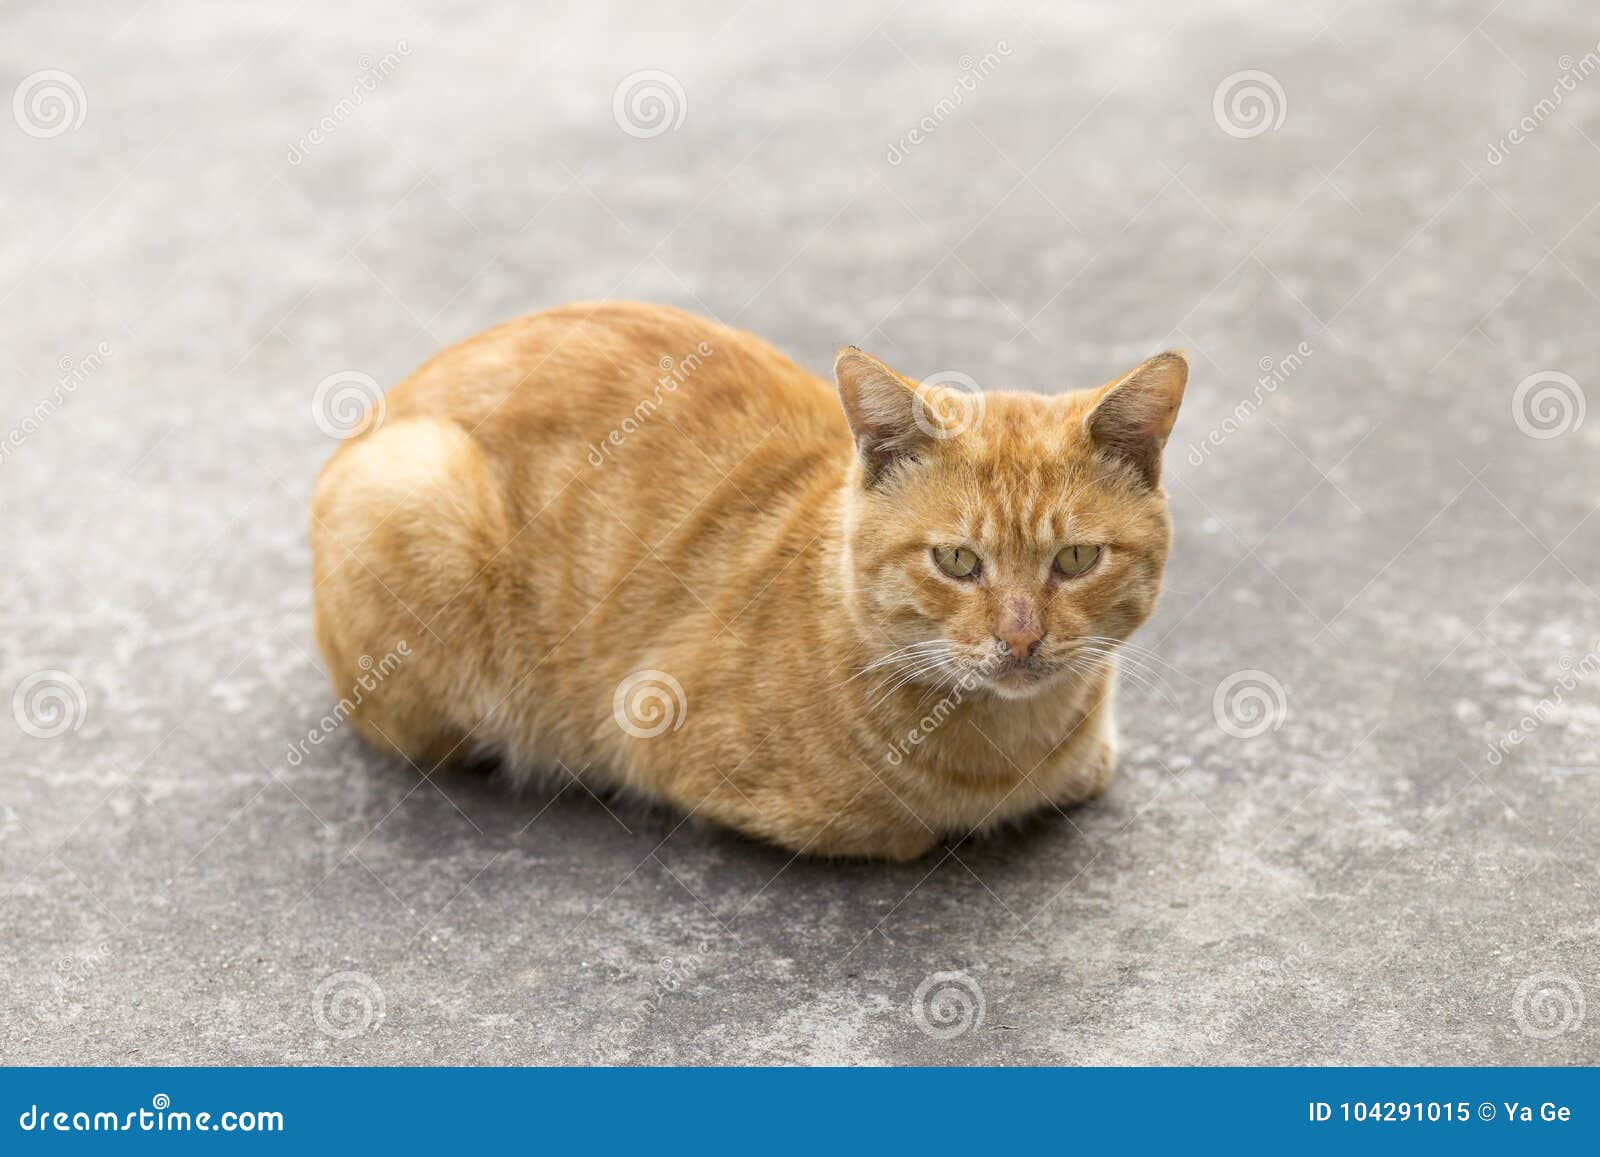 Orange cat stock image. Image of foraging, outdoor, supine - 104291015